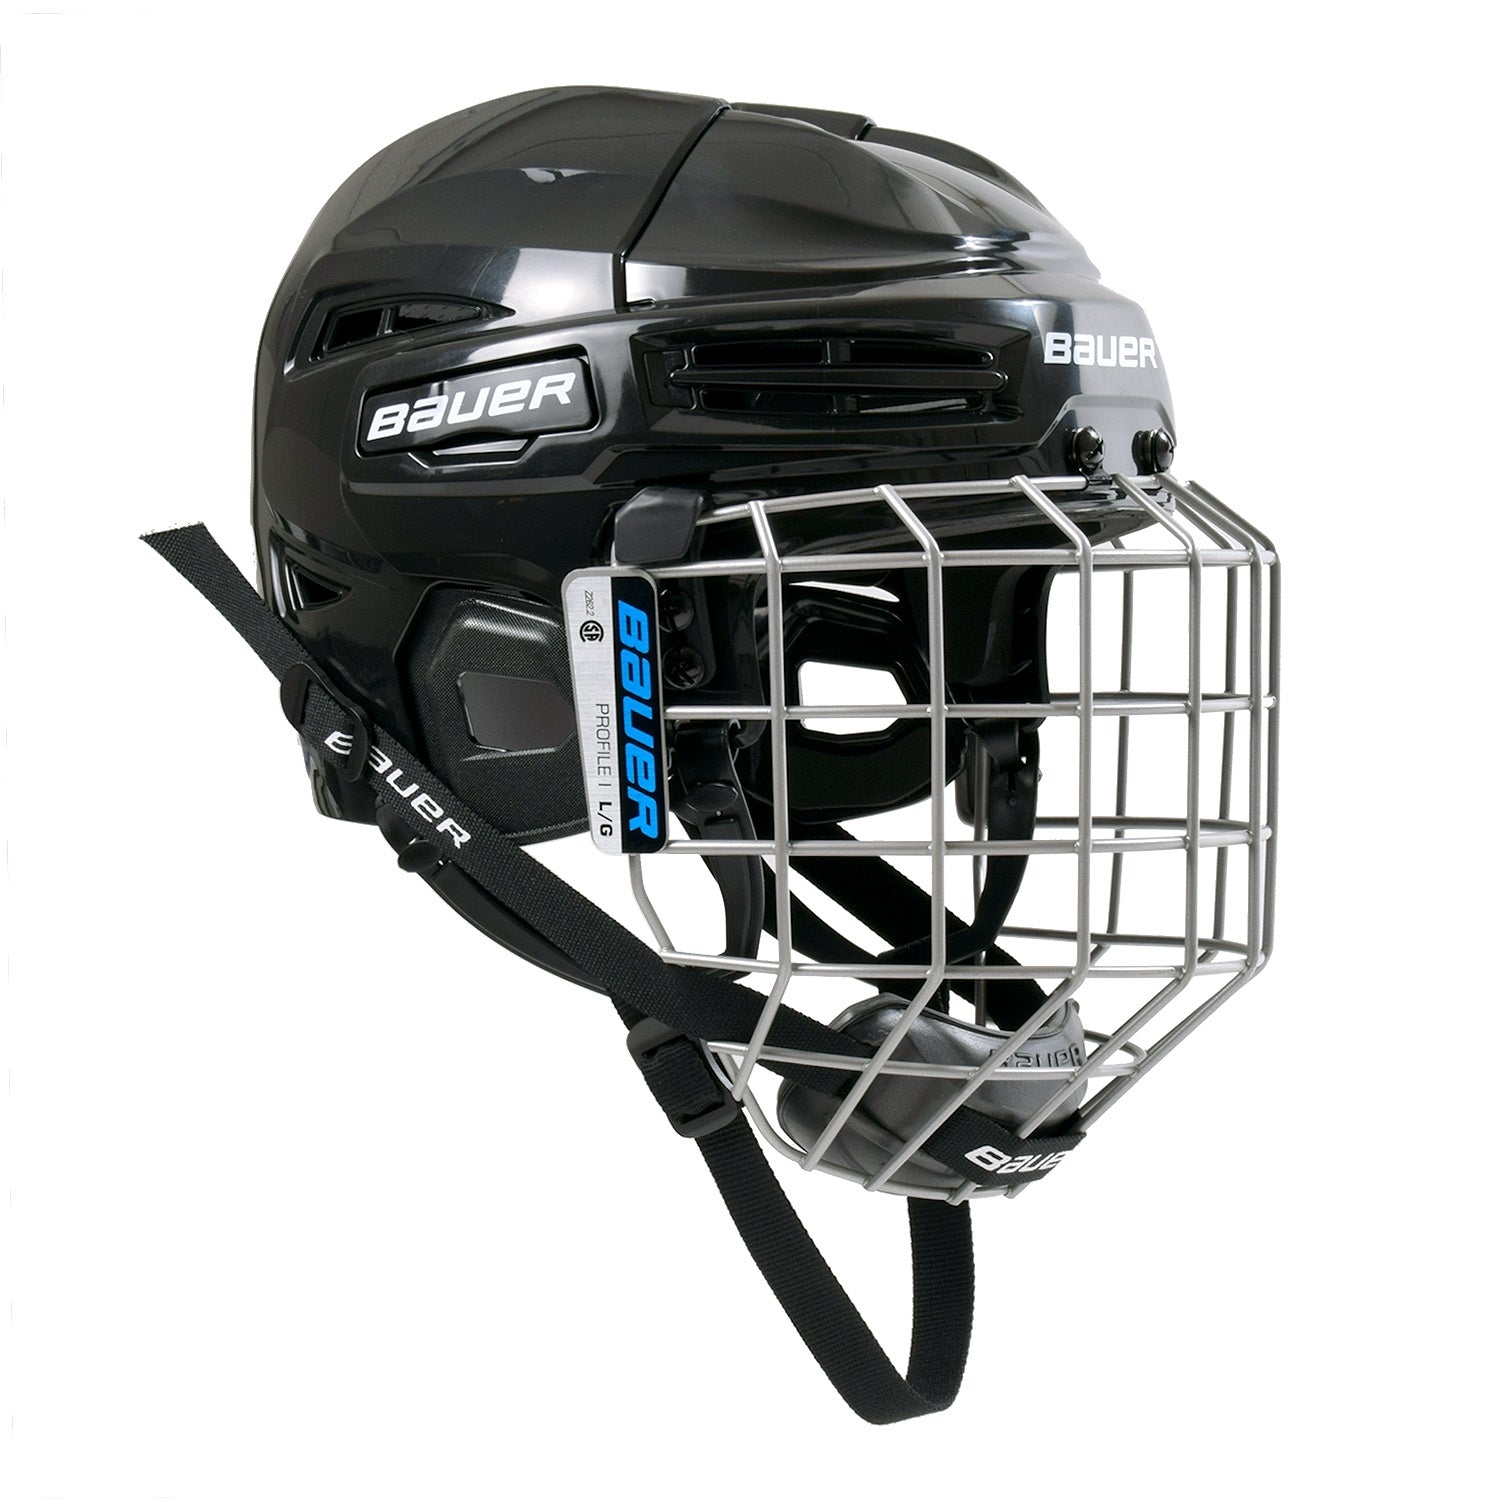 Bauer ice hockey helmet IMS 5.0 S black Combo with grid